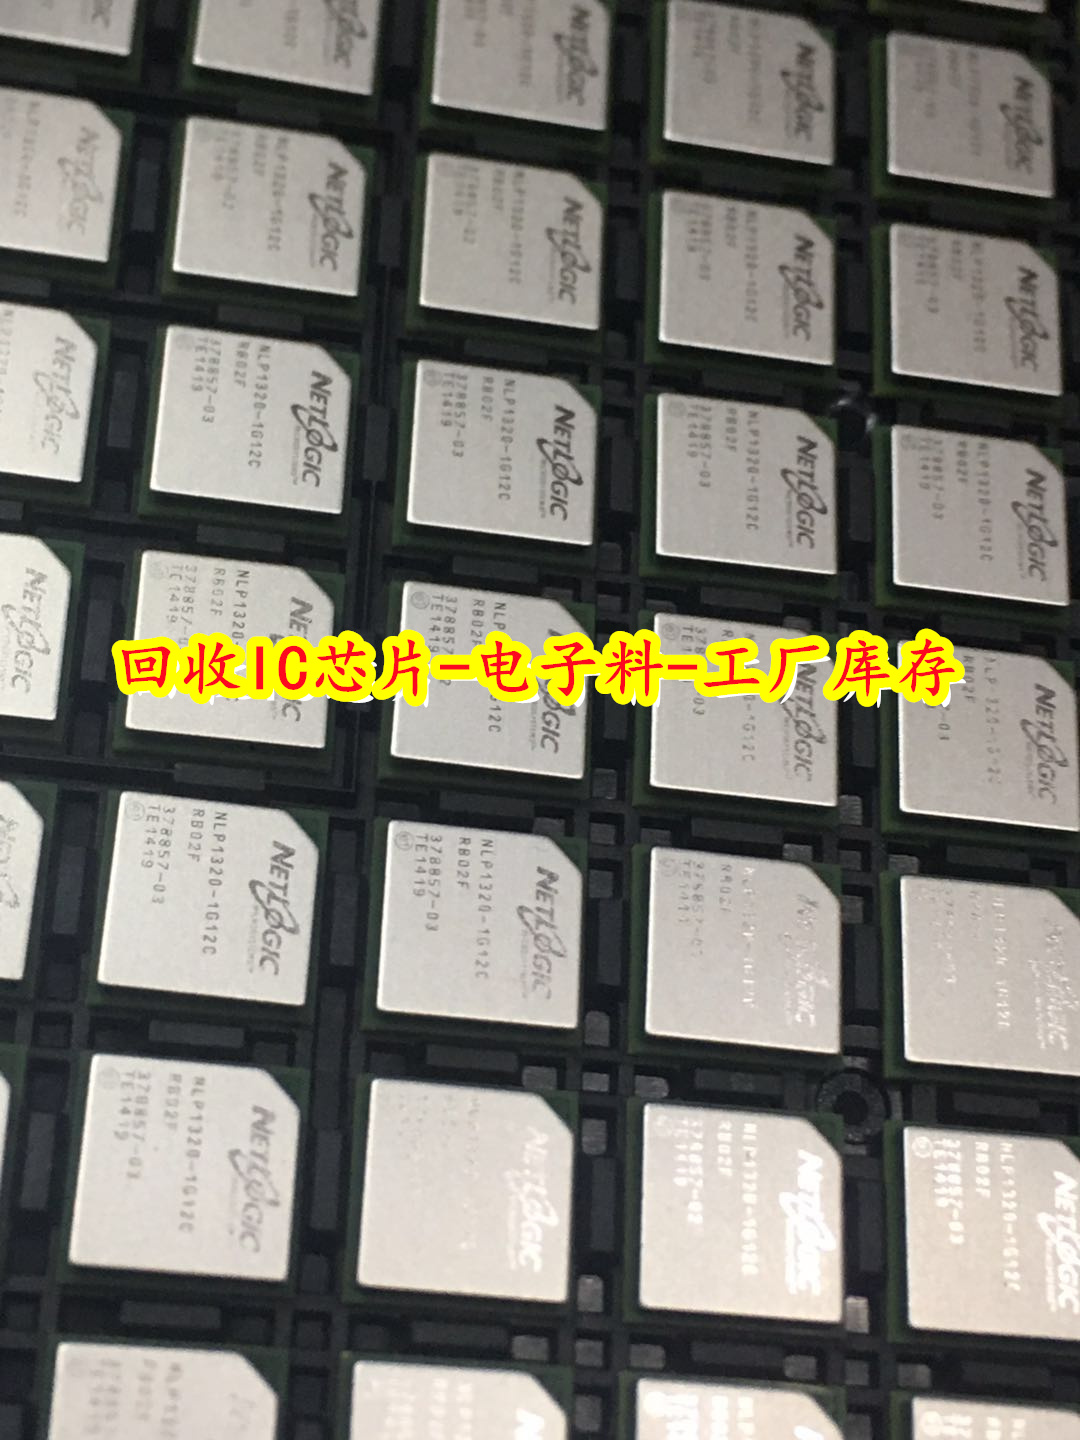 深圳回收Hisilicon芯片 回收联想芯片